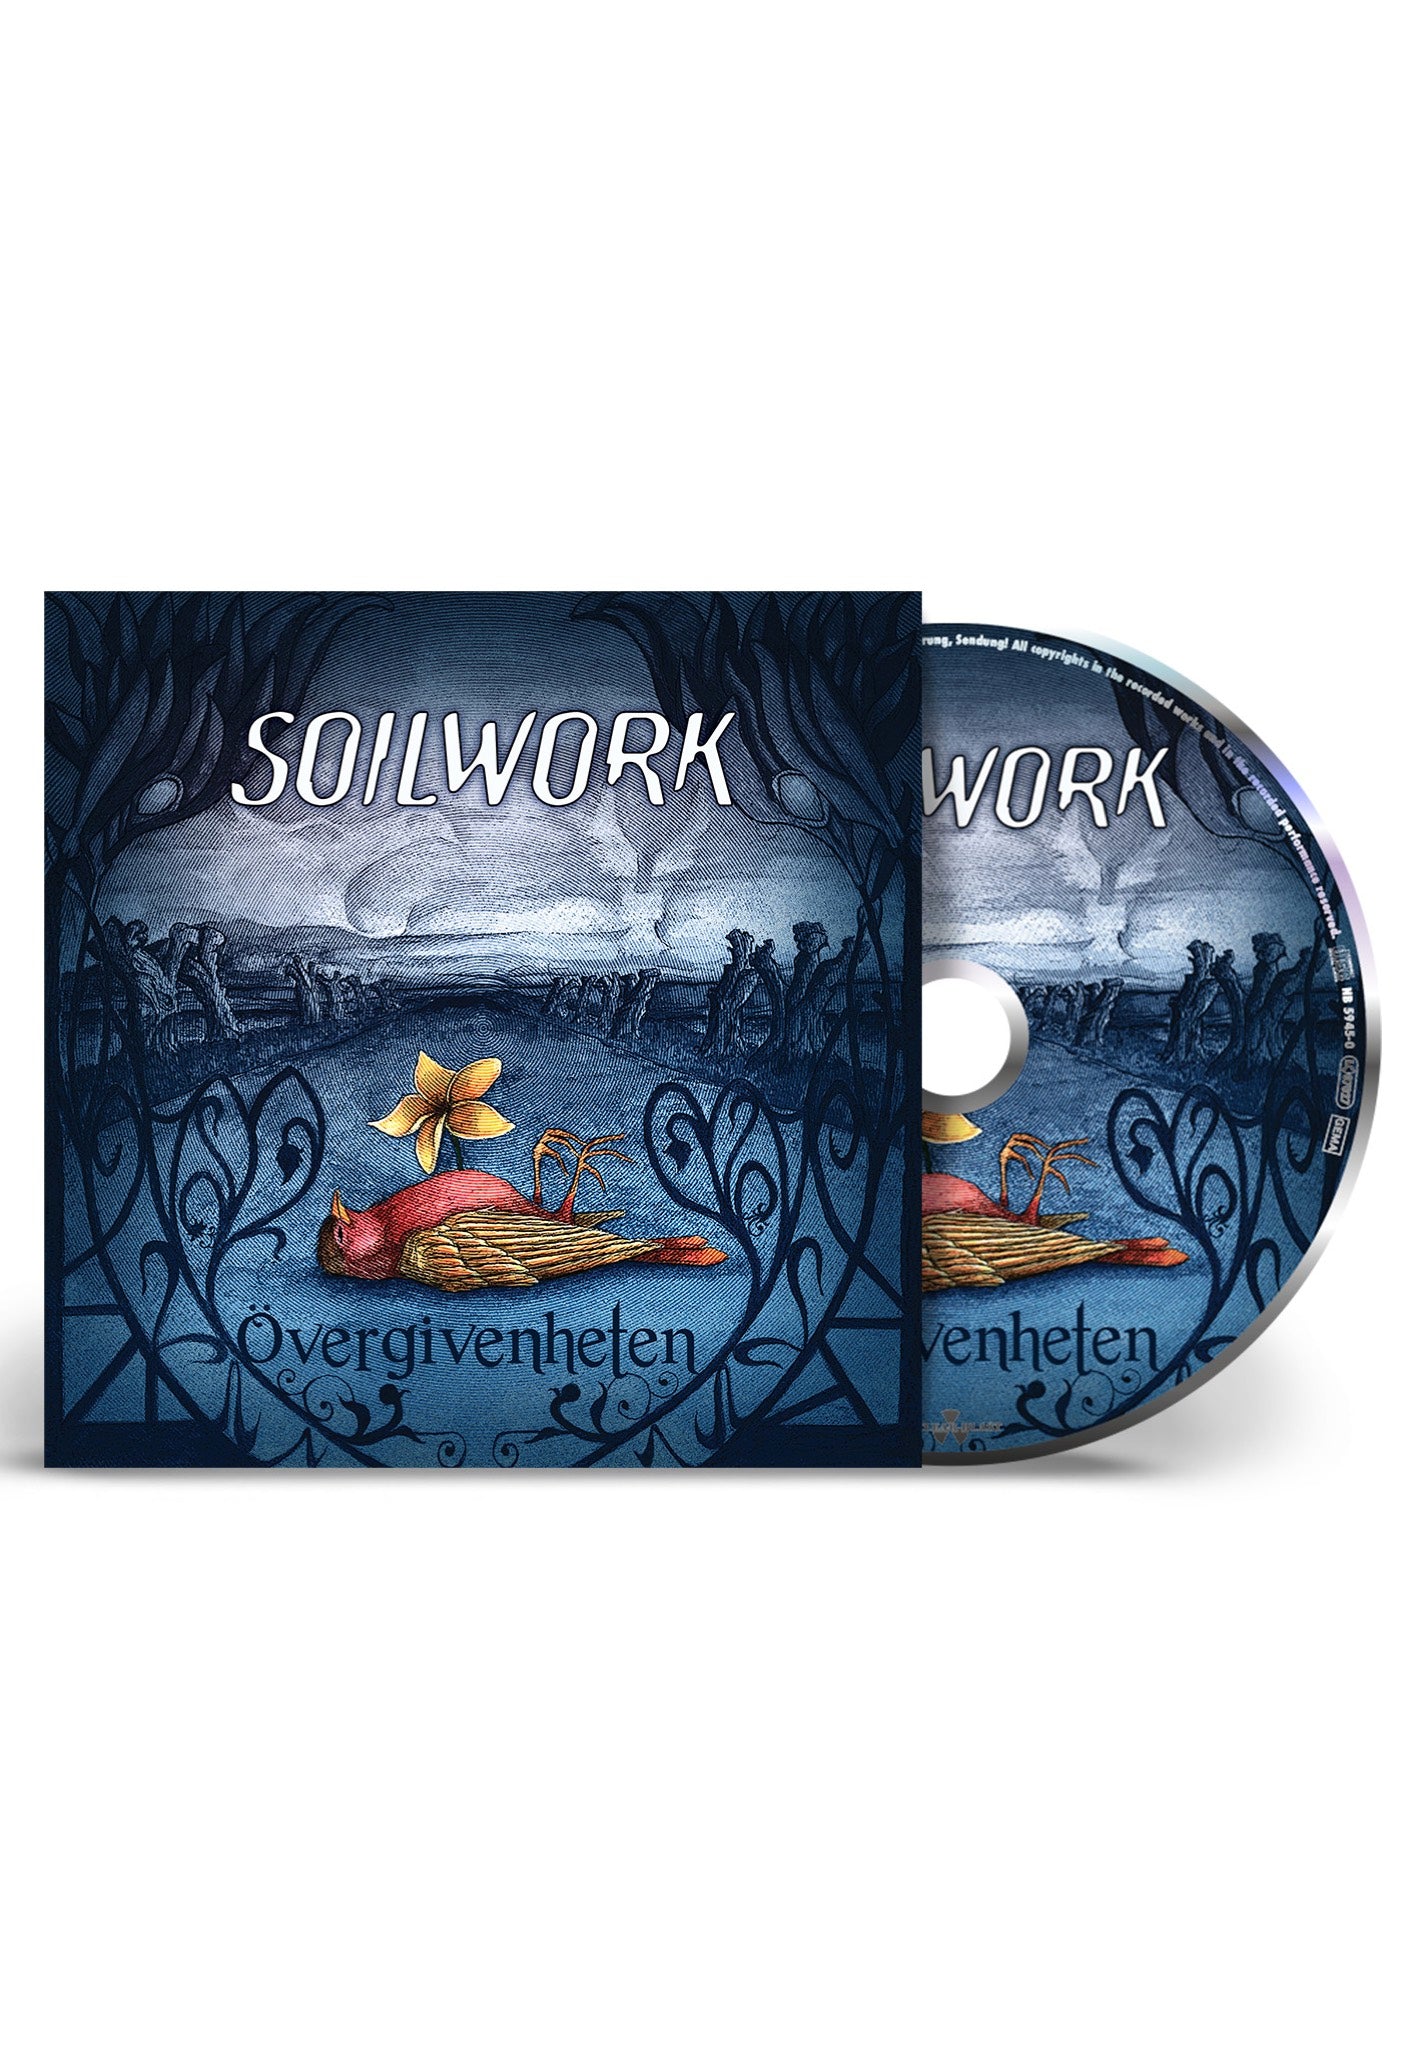 Soilwork - Övergivenheten Ltd. - Digipak CD